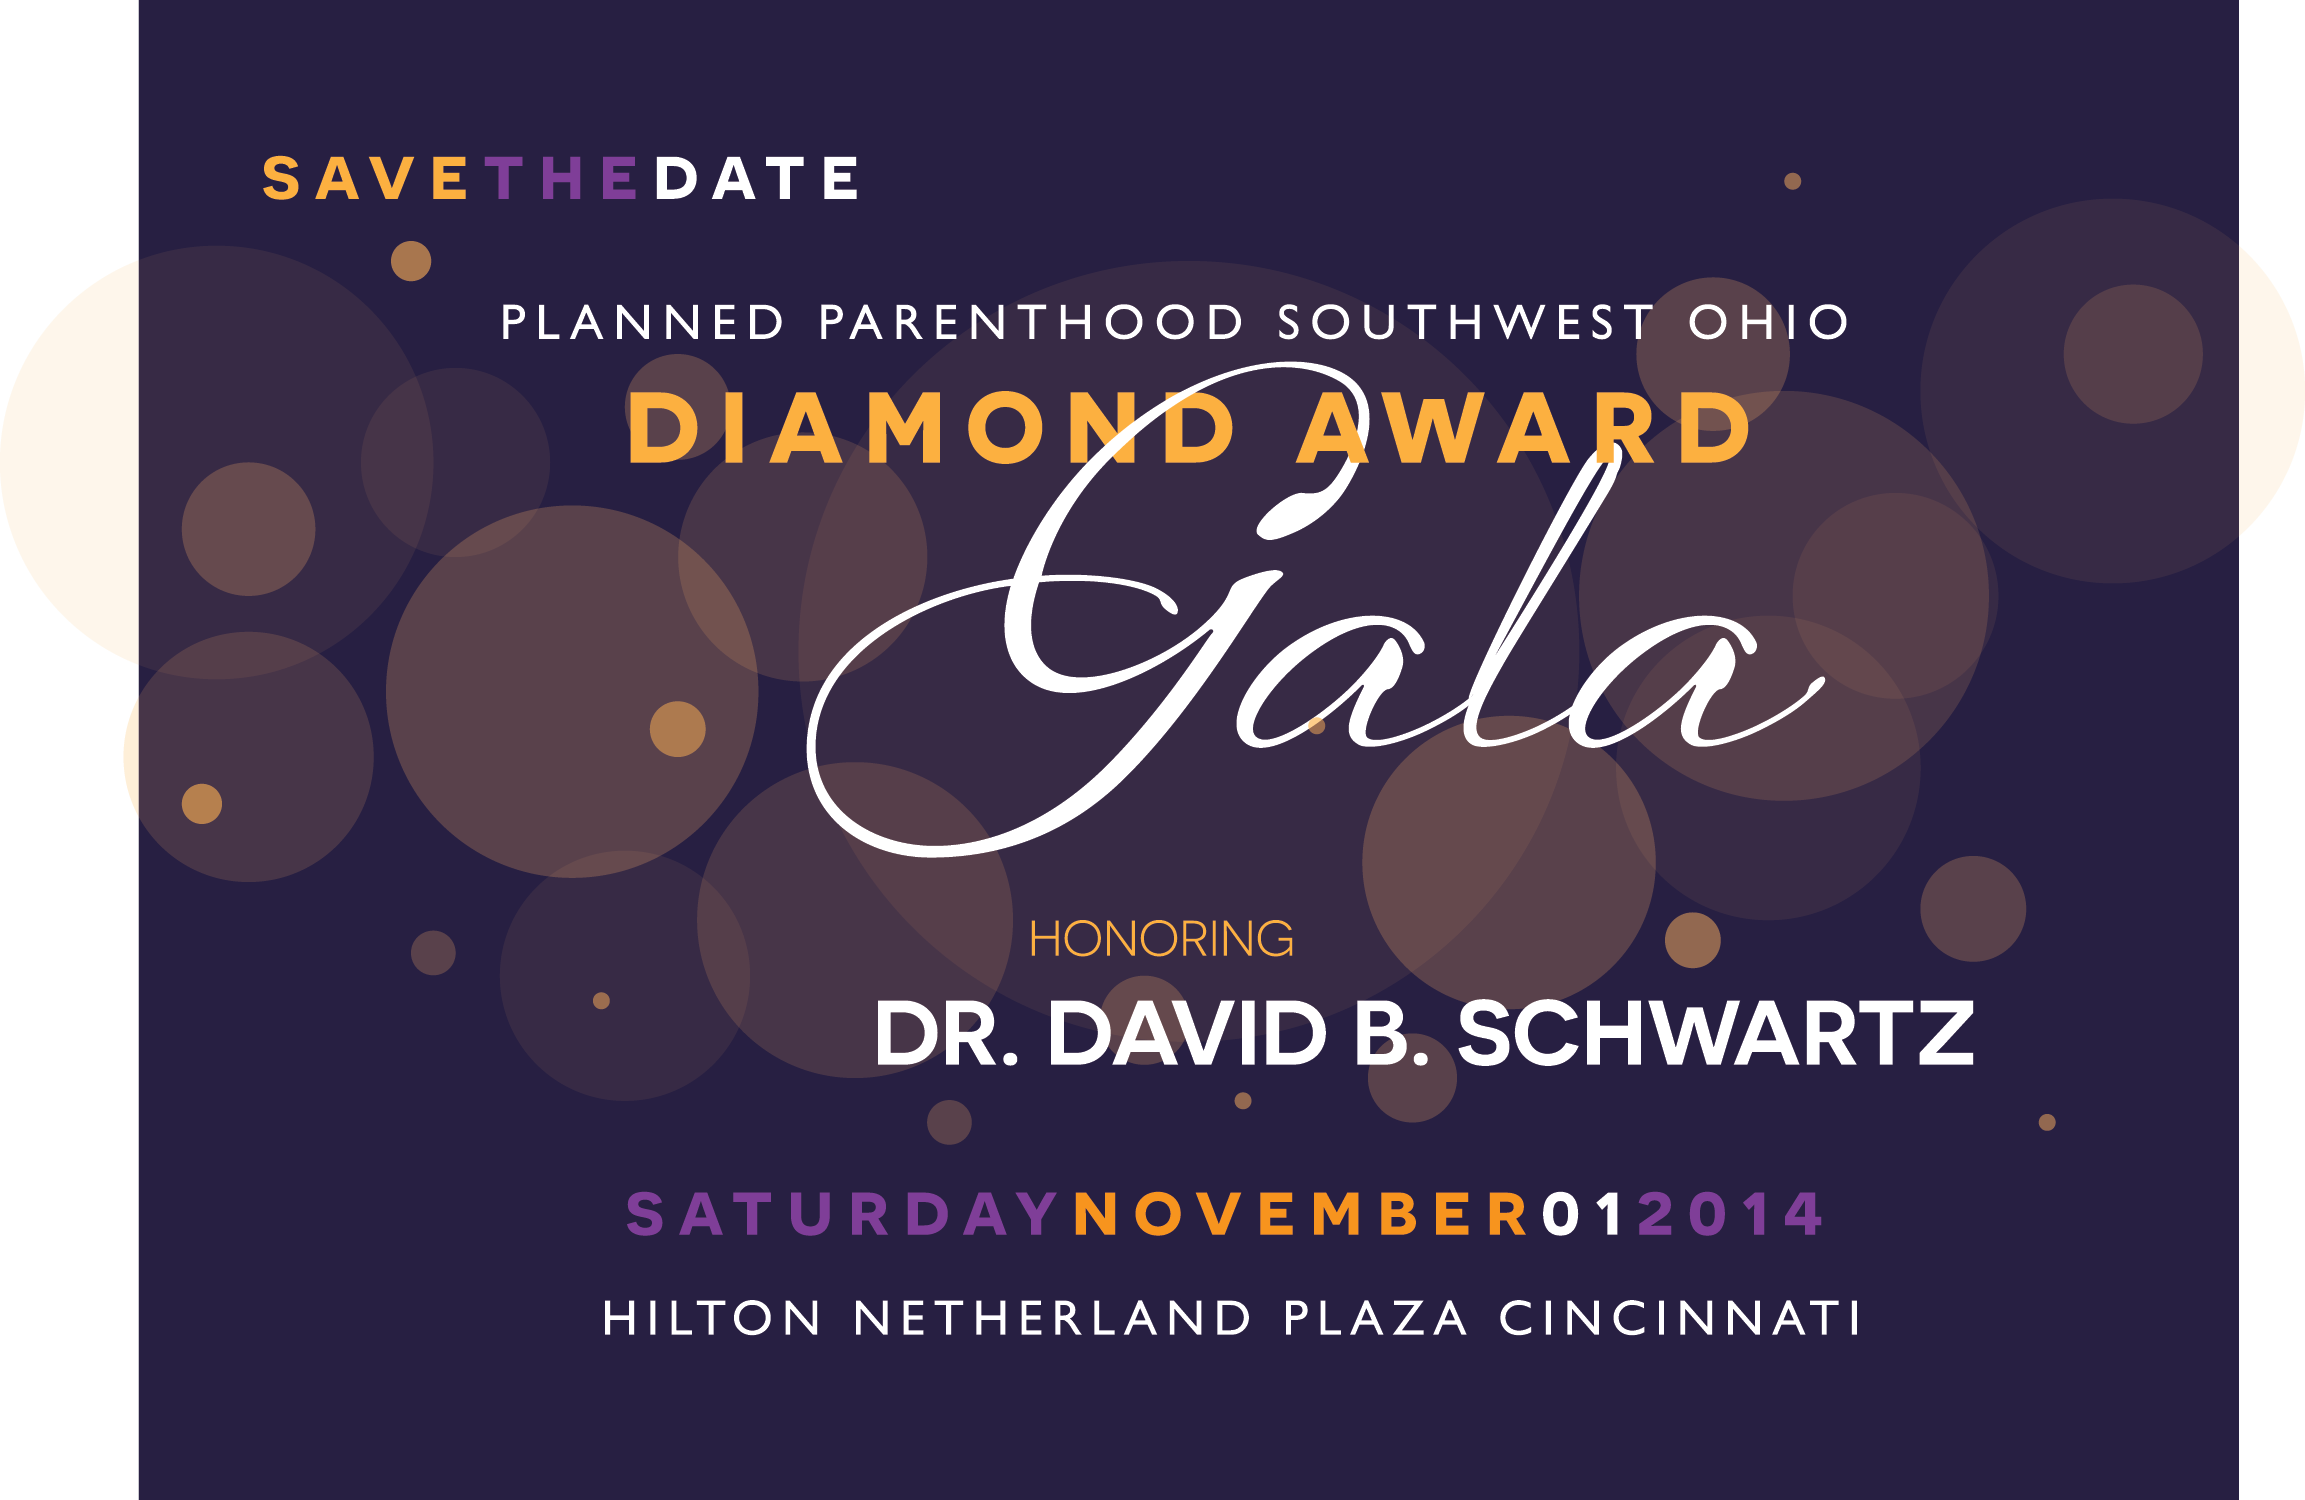 Planned Parenthood 2014 Diamond Award Gala honoring David Schwartz